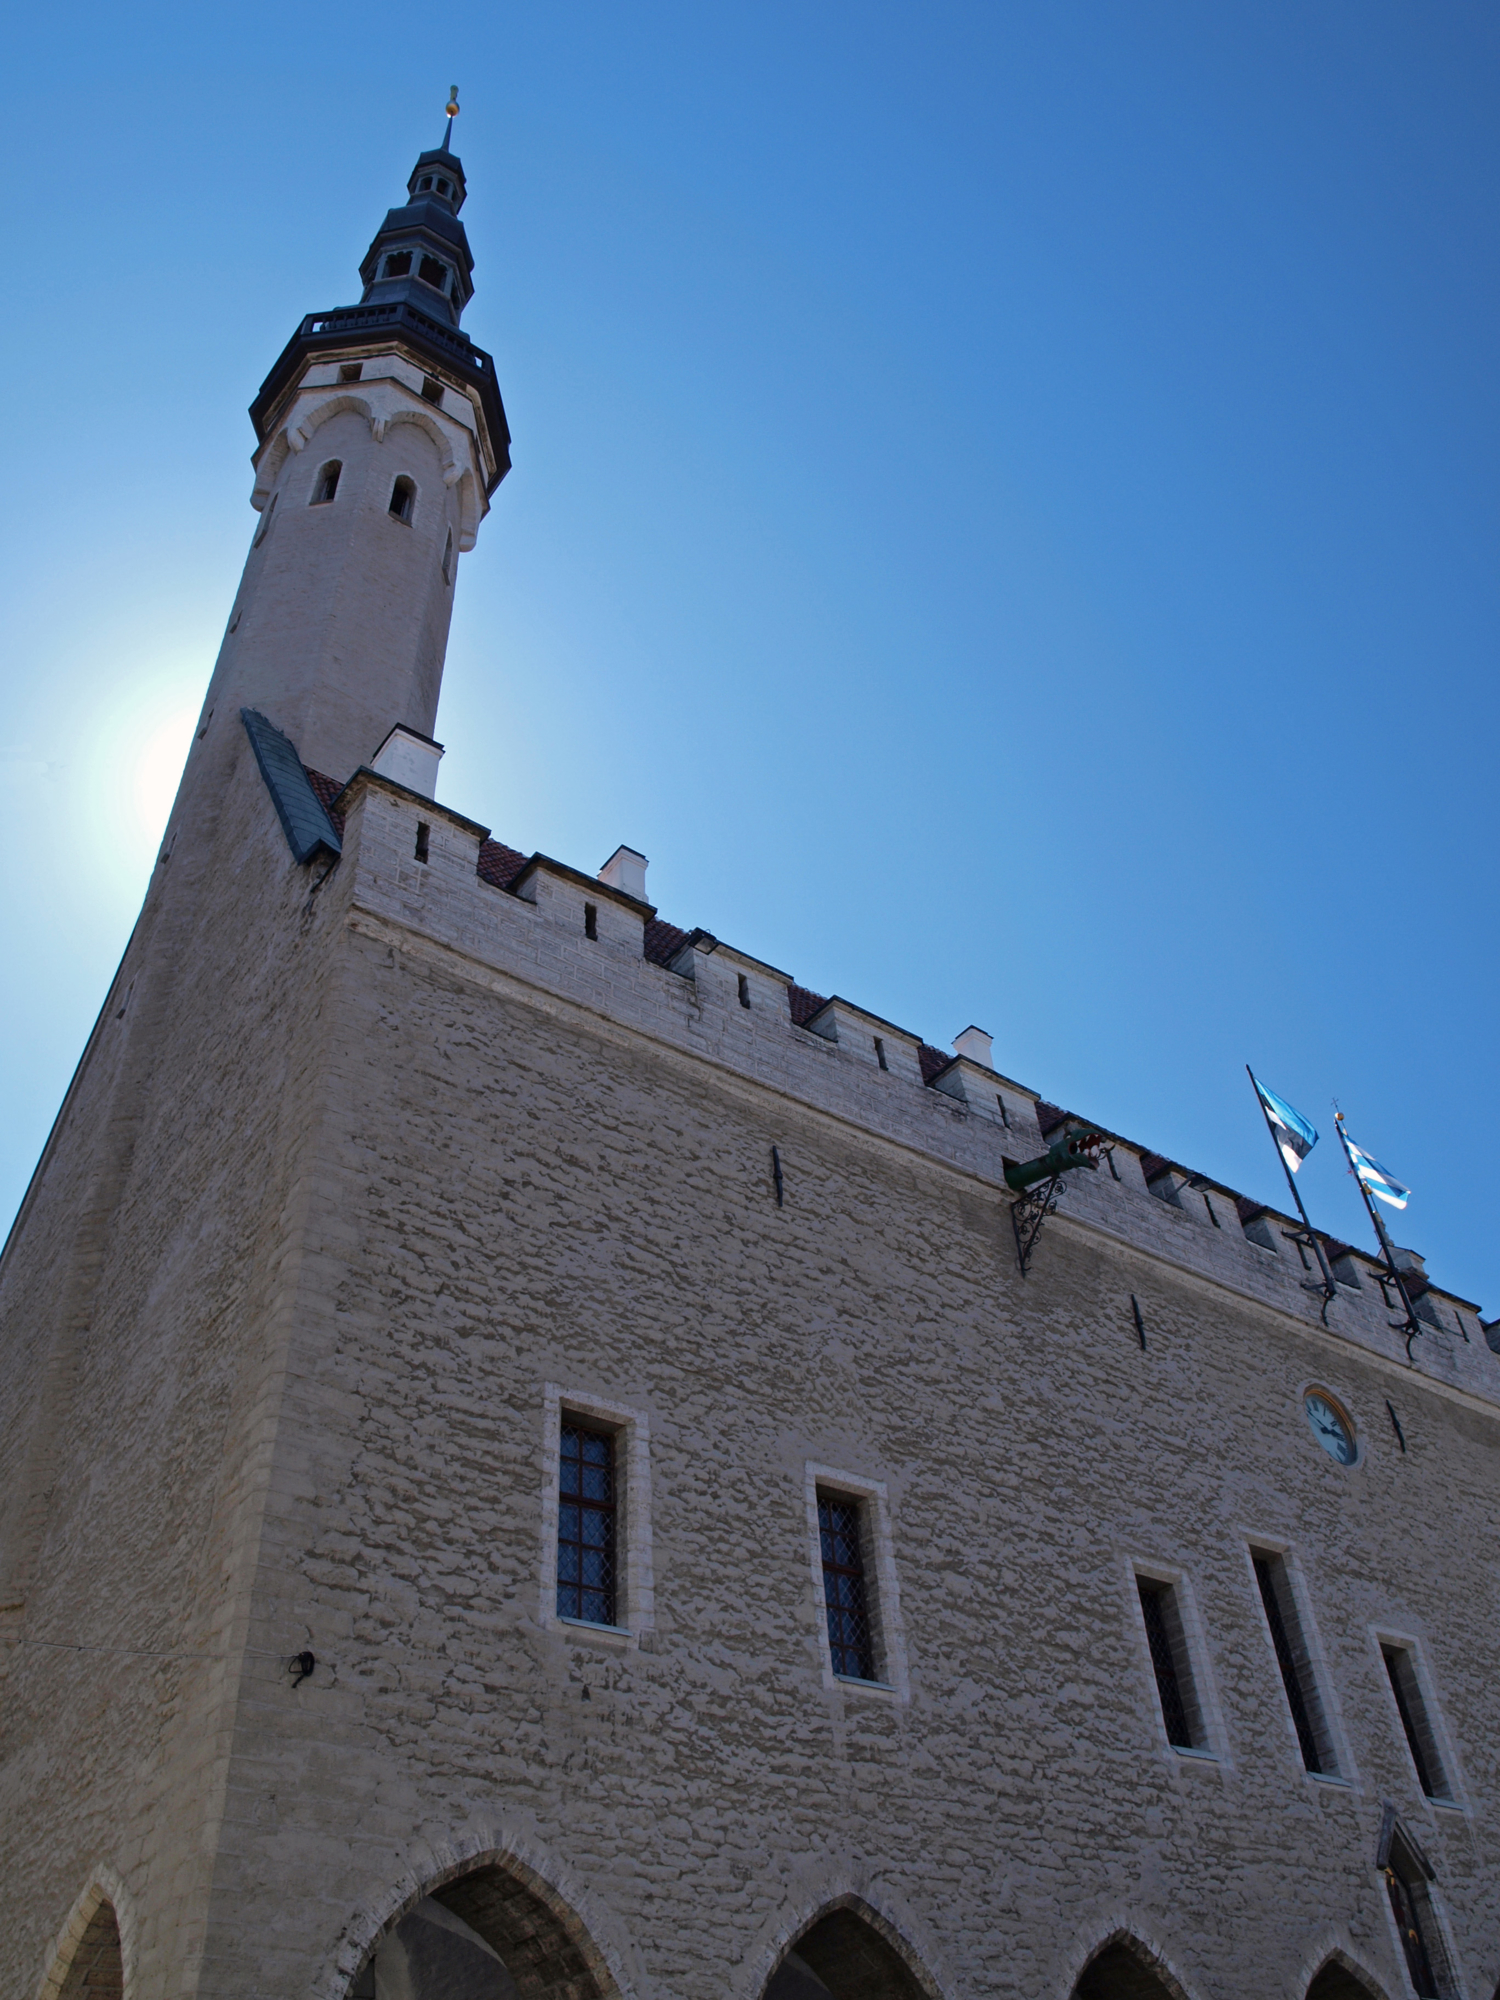 Таллинская ратуша